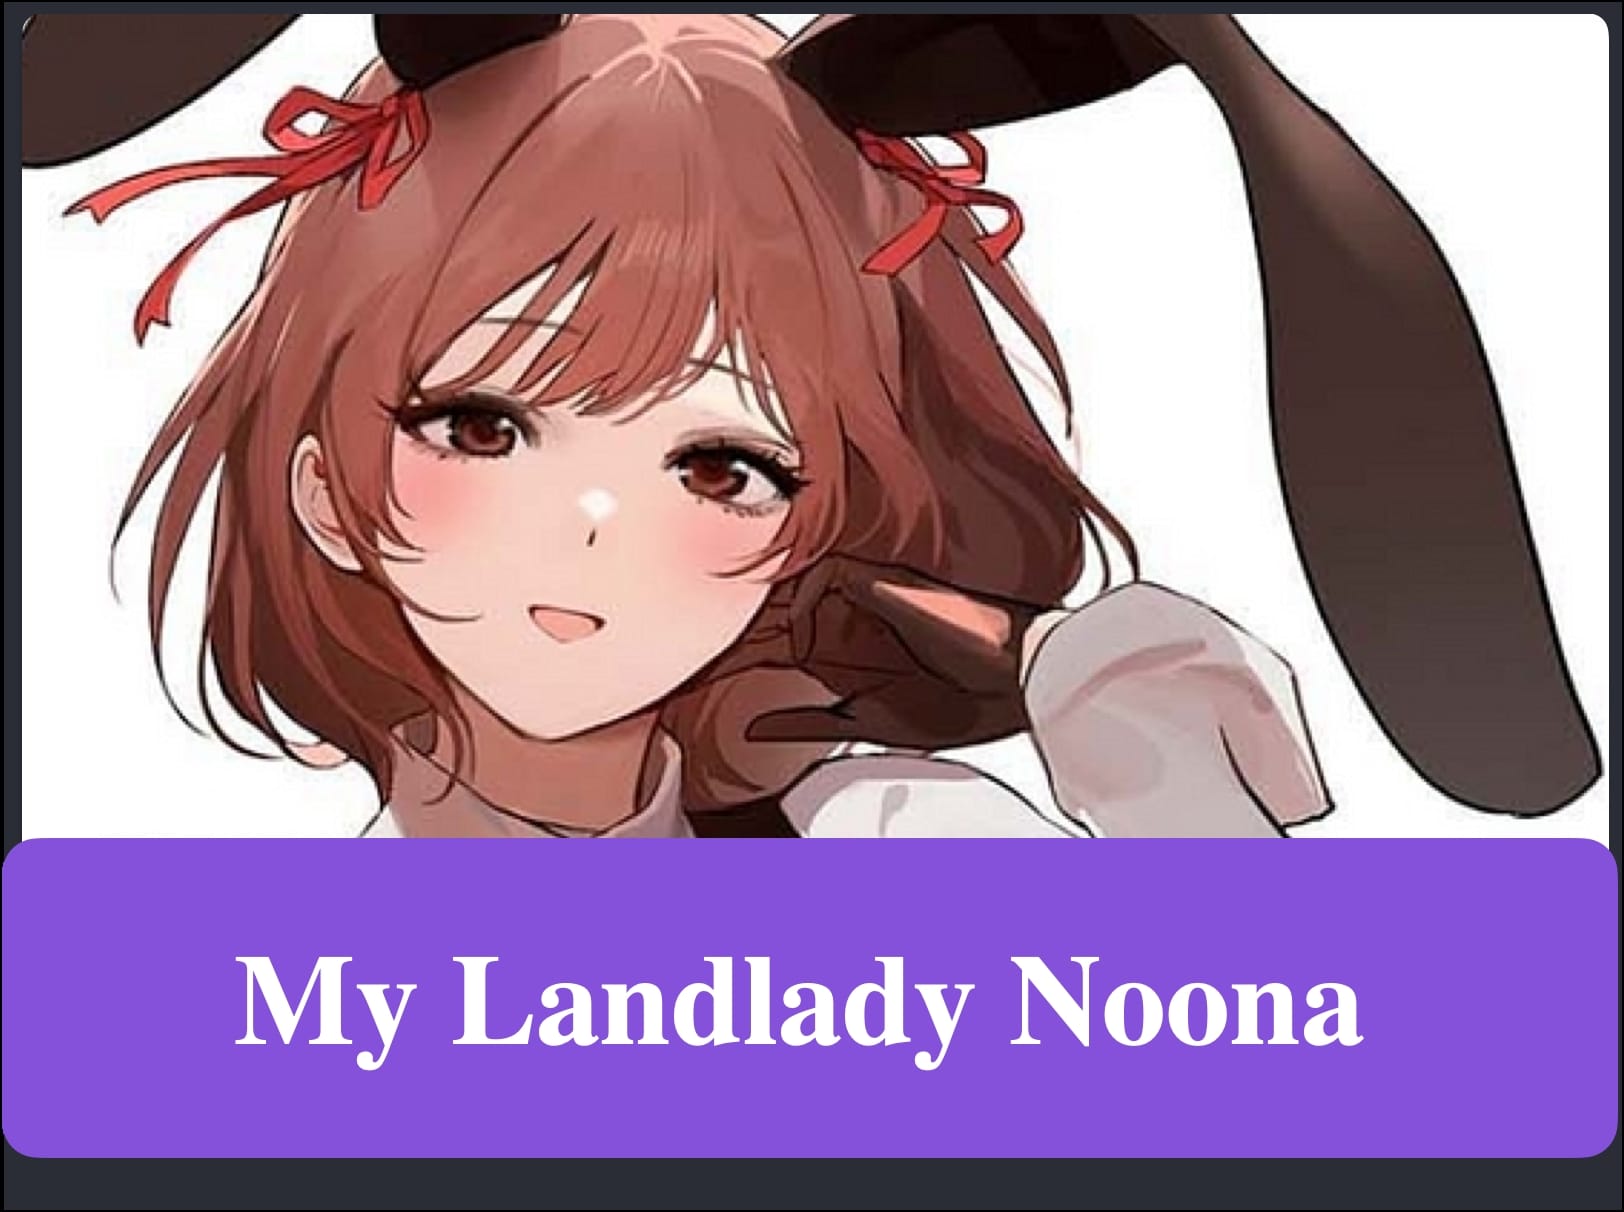 My Landlady Noona - A Comic Book Review